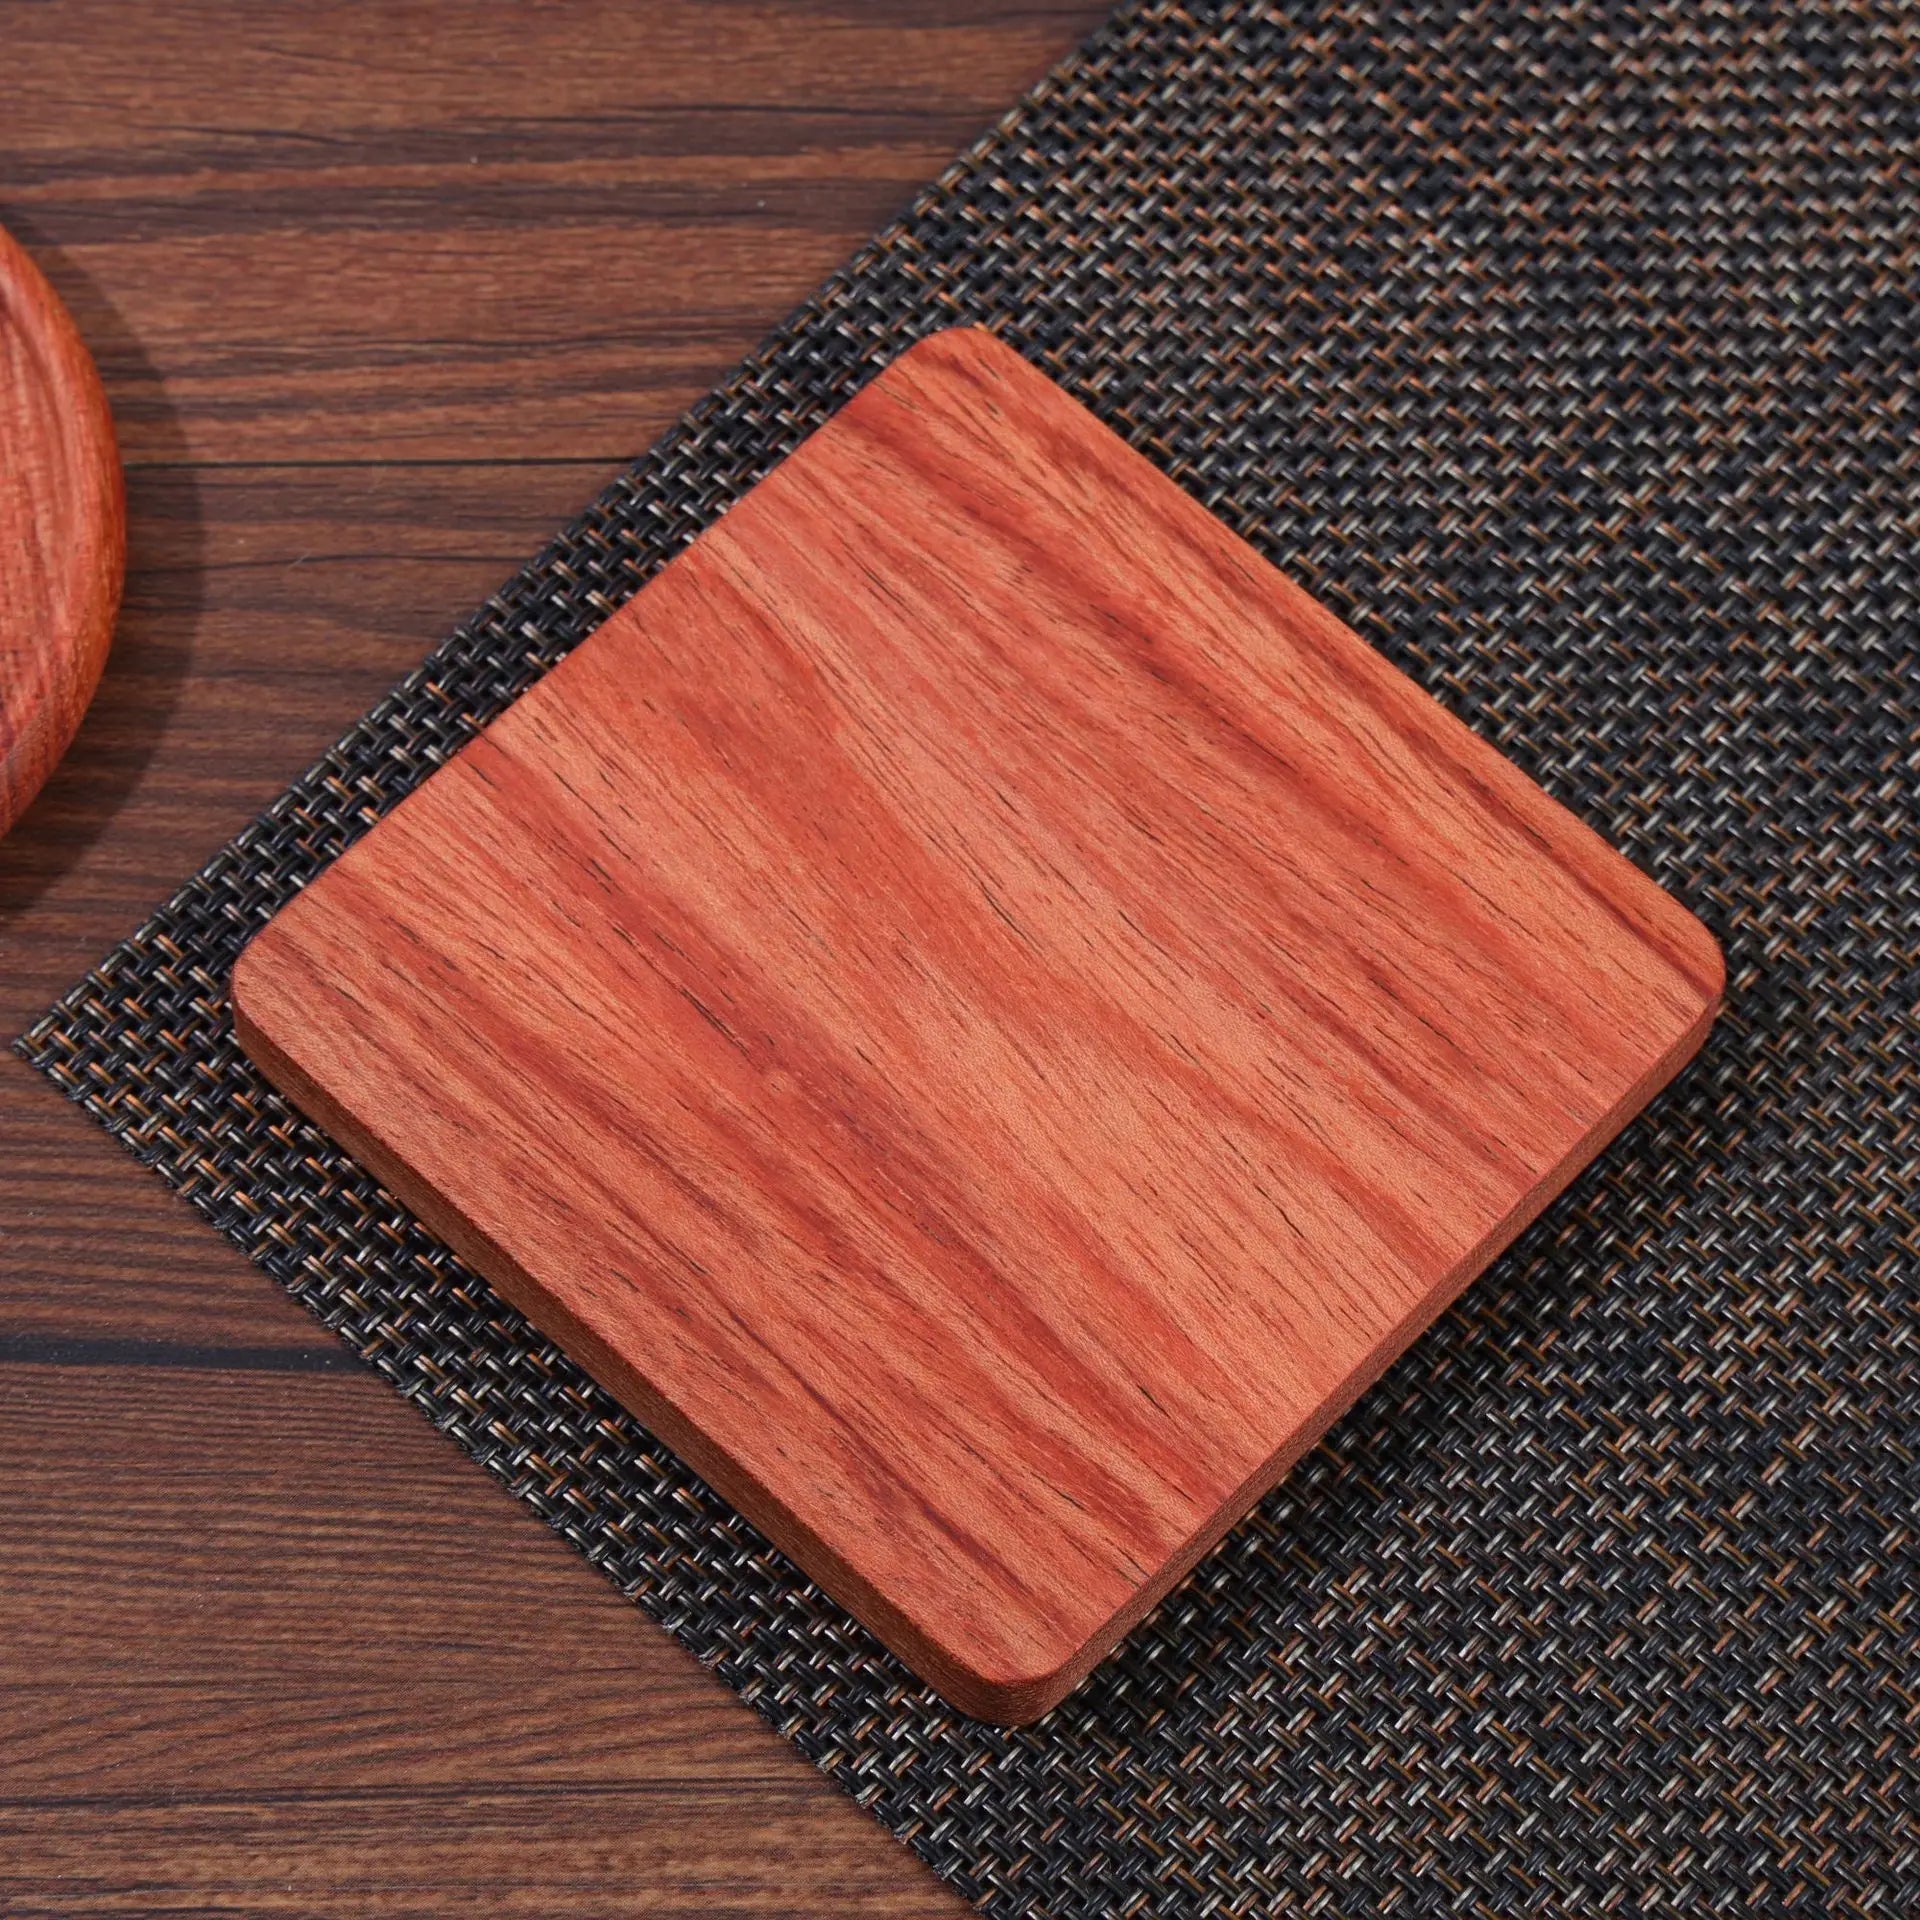 Classic Style Solid Wood Coasters - ZATShop Rosewood Square - Flat